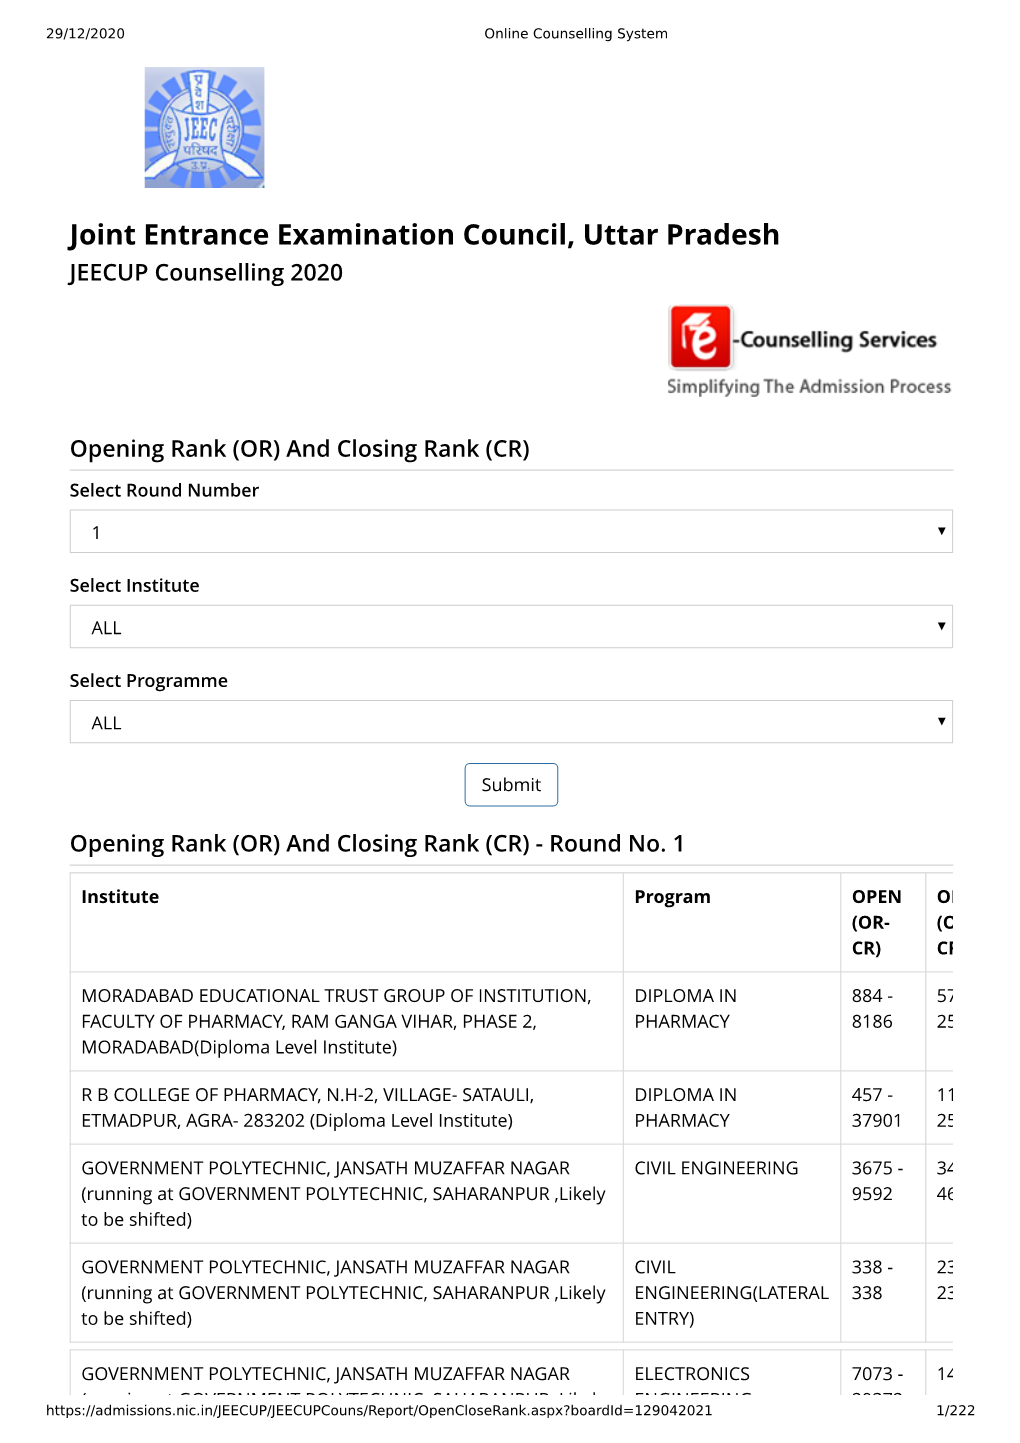 Joint Entrance Examination Council, Uttar Pradesh JEECUP Counselling 2020